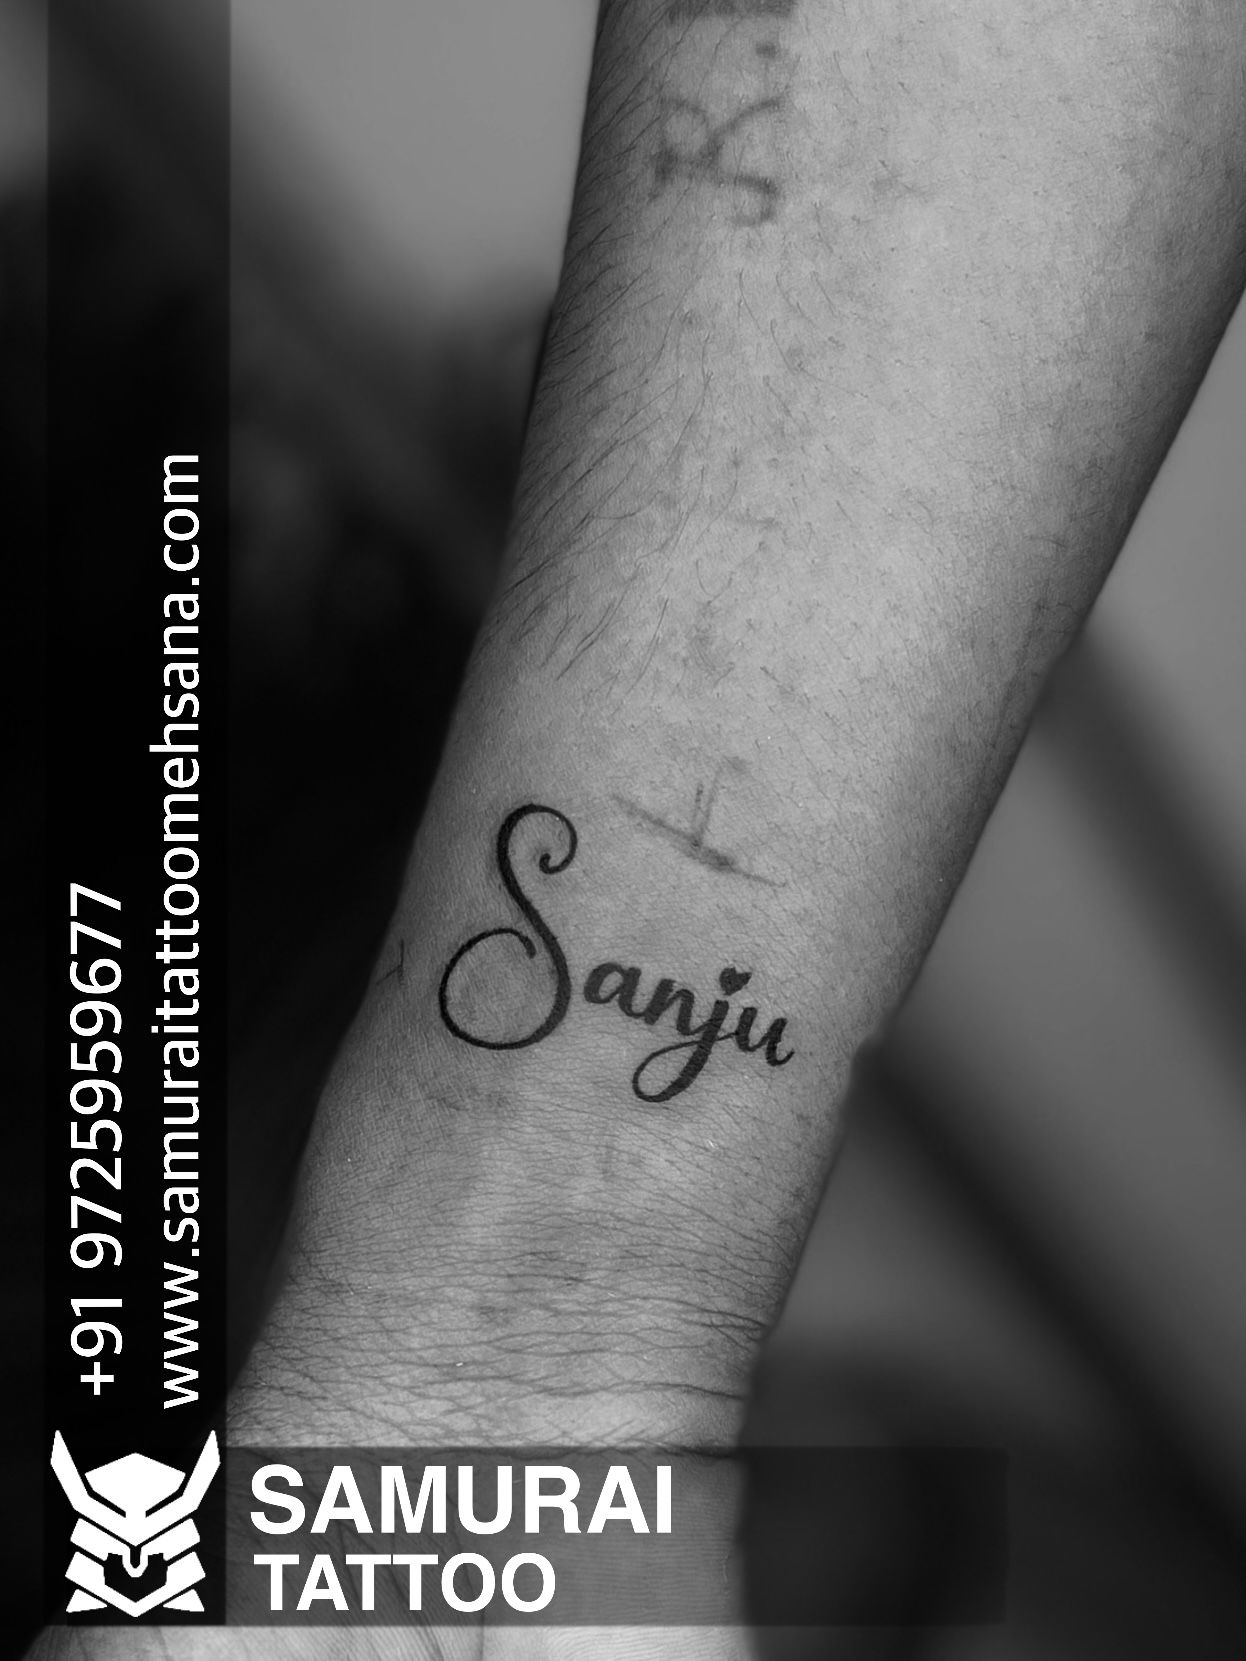 Sanjay name tattoo design - YouTube